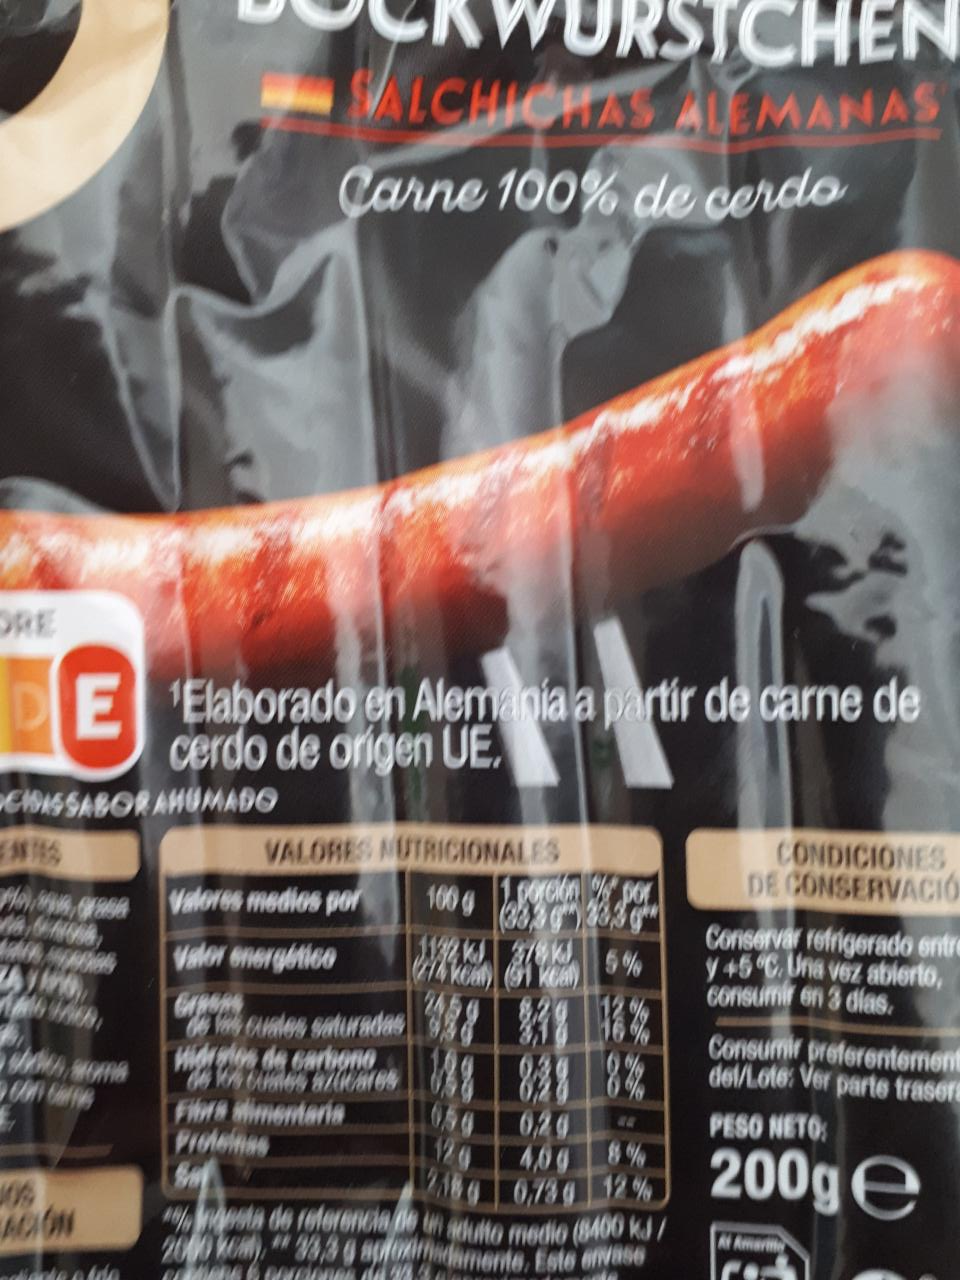 Fotografie - Bockwurstchen 100% carne cerdo Auchan